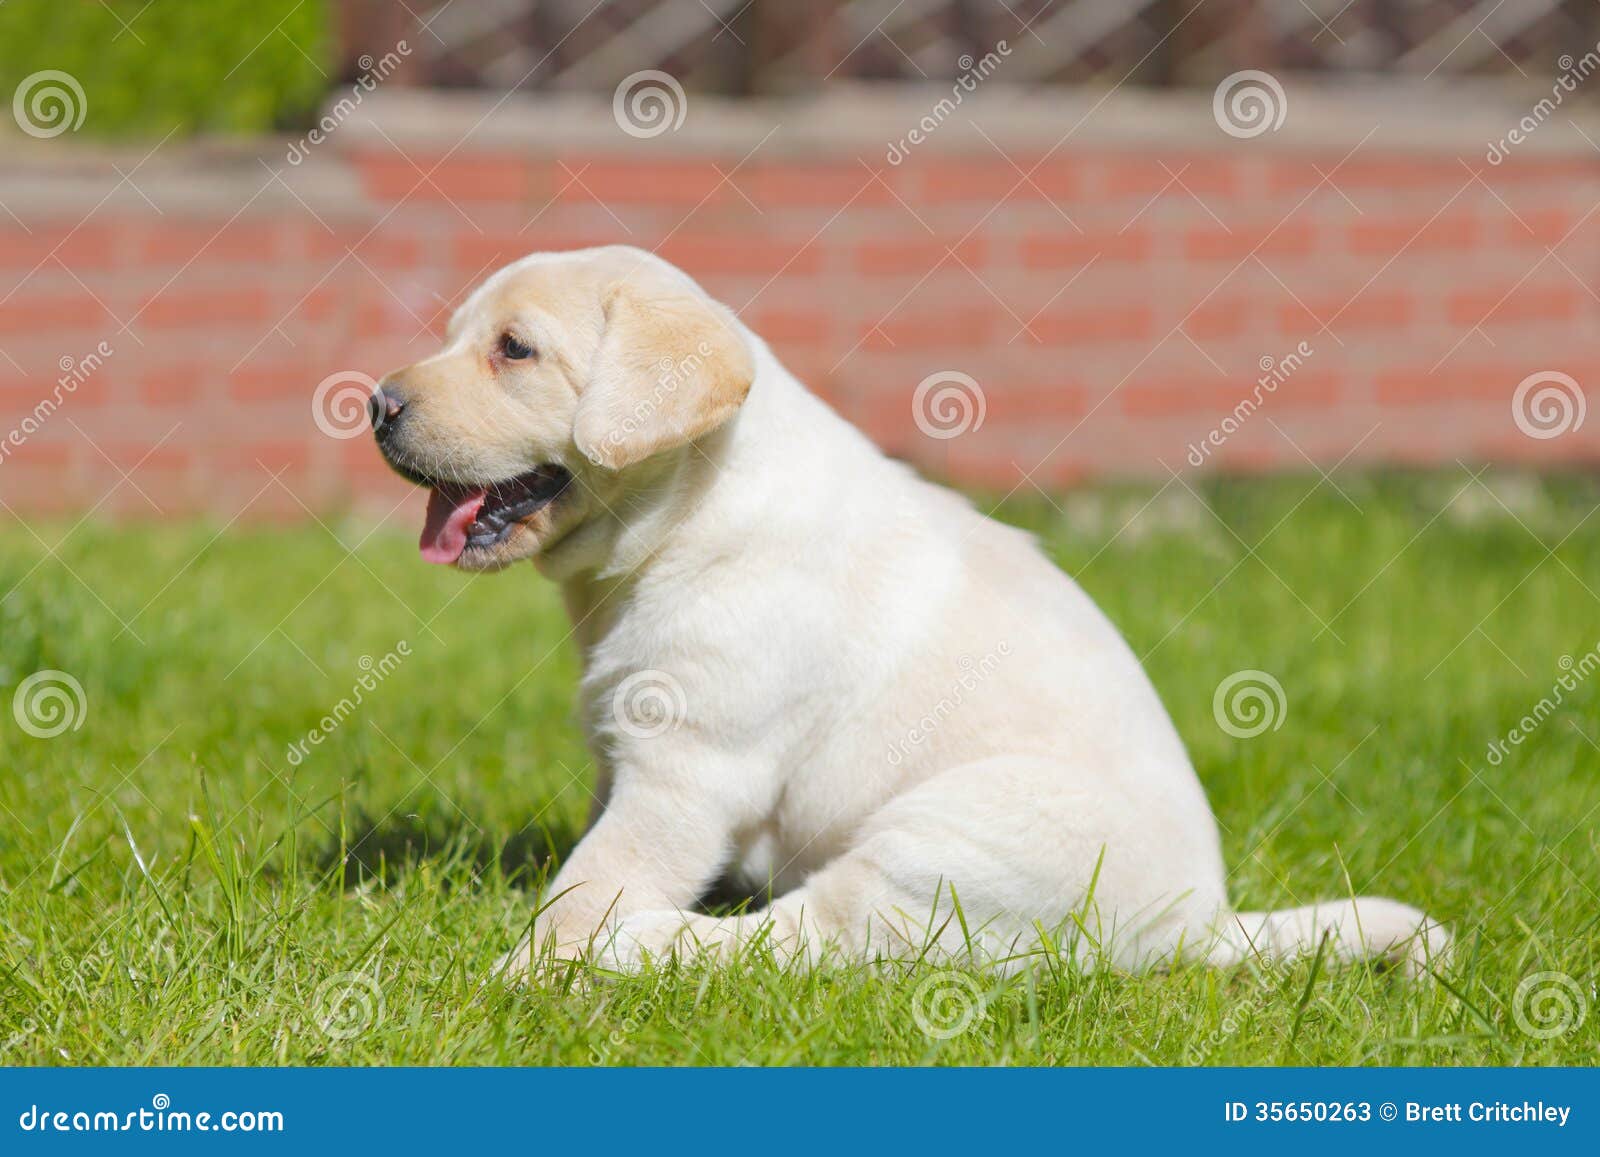 Puppy yellow Labrador dog panting in garden, toilet training.